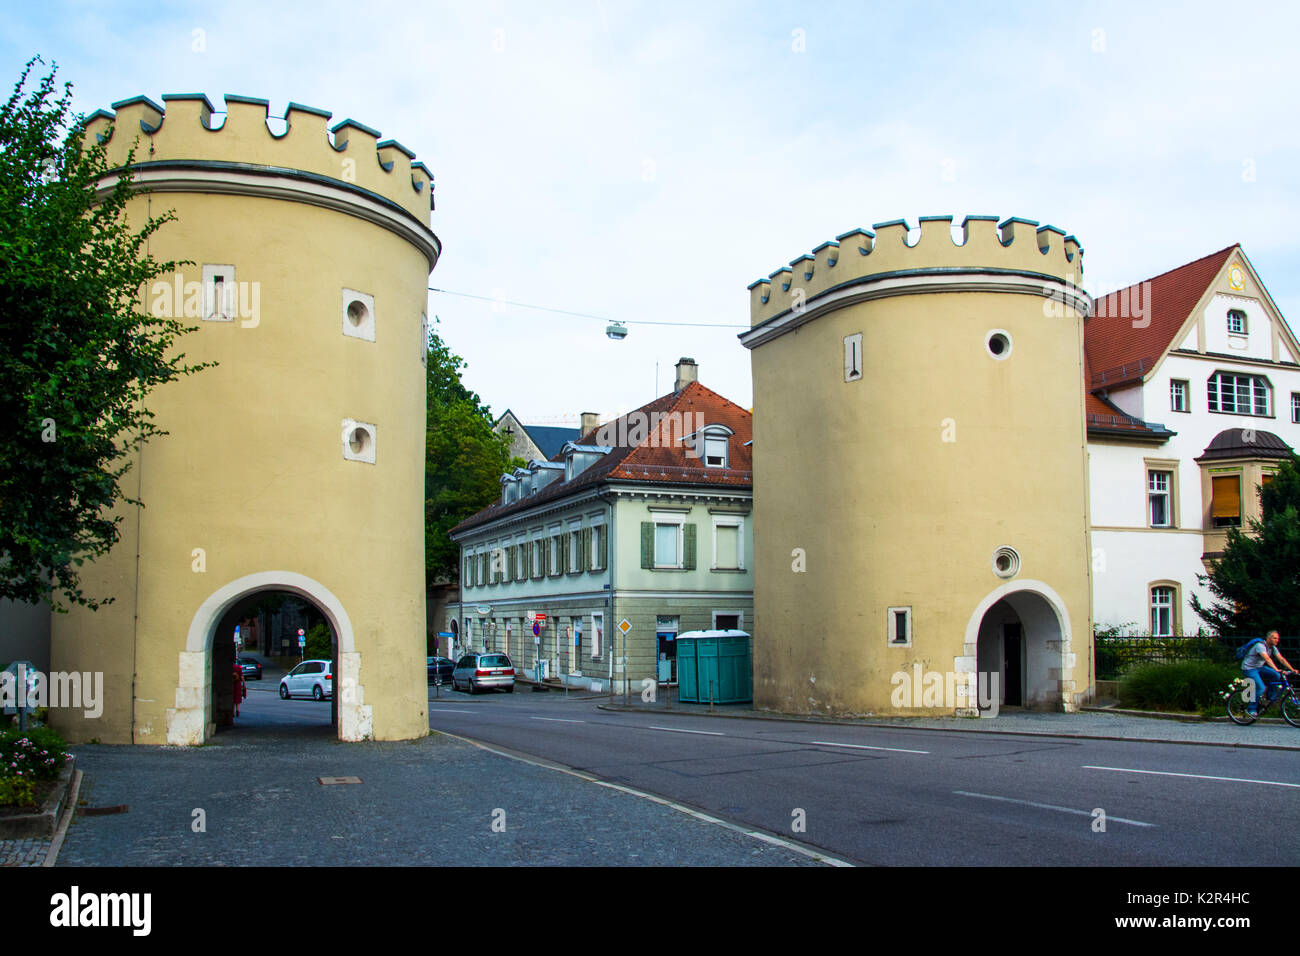 Un gateway in Schloss St Emmeram, il palazzo dei Thurn und Taxis family, Regensburg, Germania Foto Stock